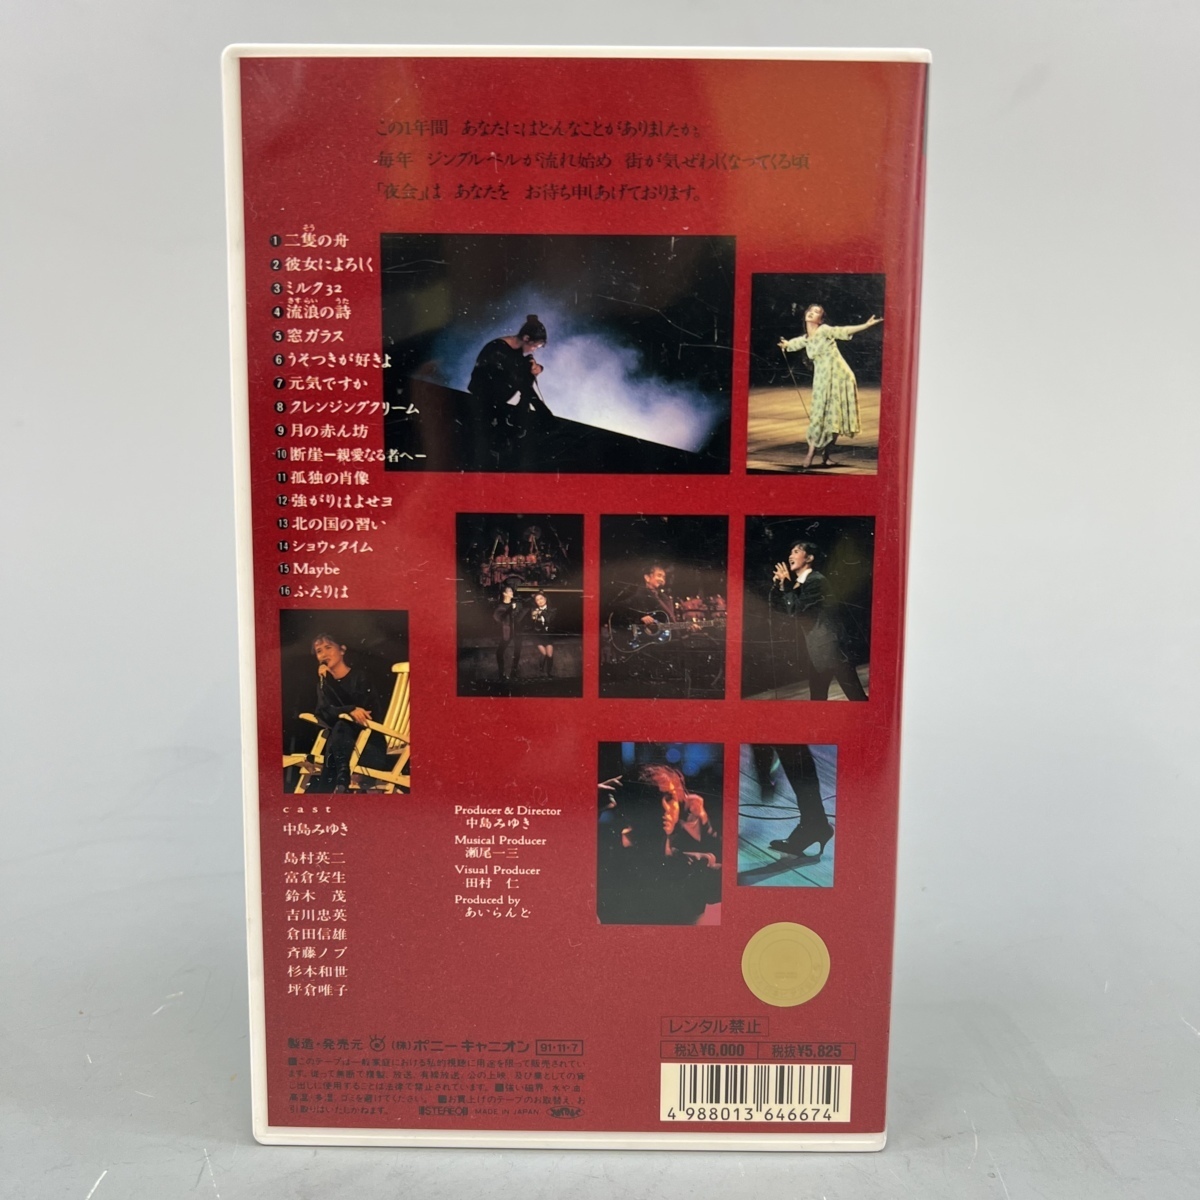 * Nakajima Miyuki night .1990 present condition goods VHS*